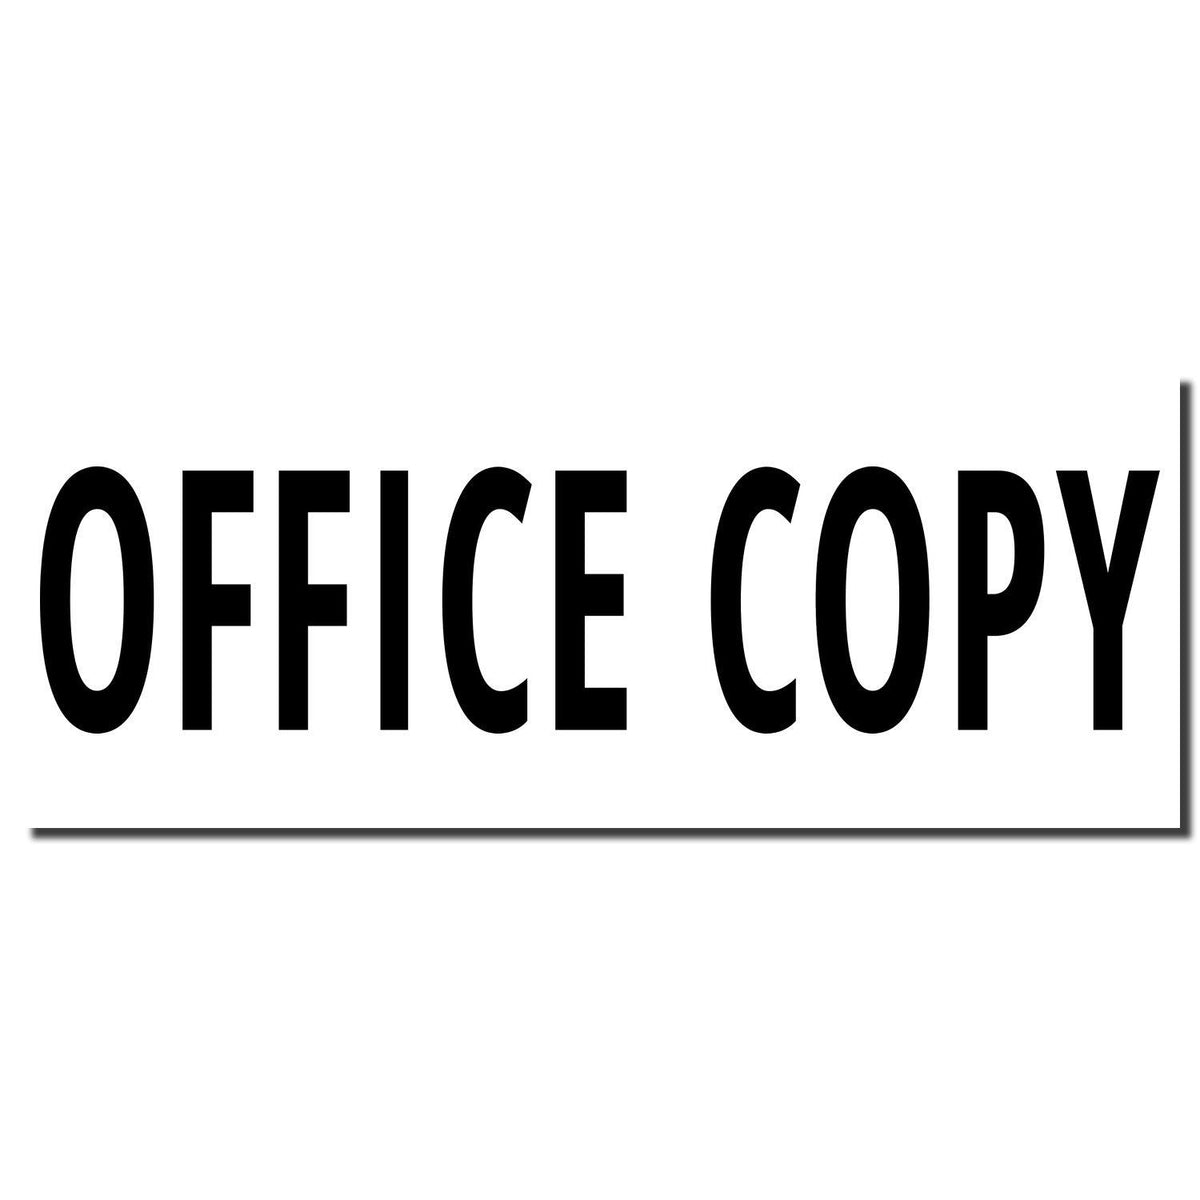 Enlarged Imprint Large Office Copy Rubber Stamp Sample